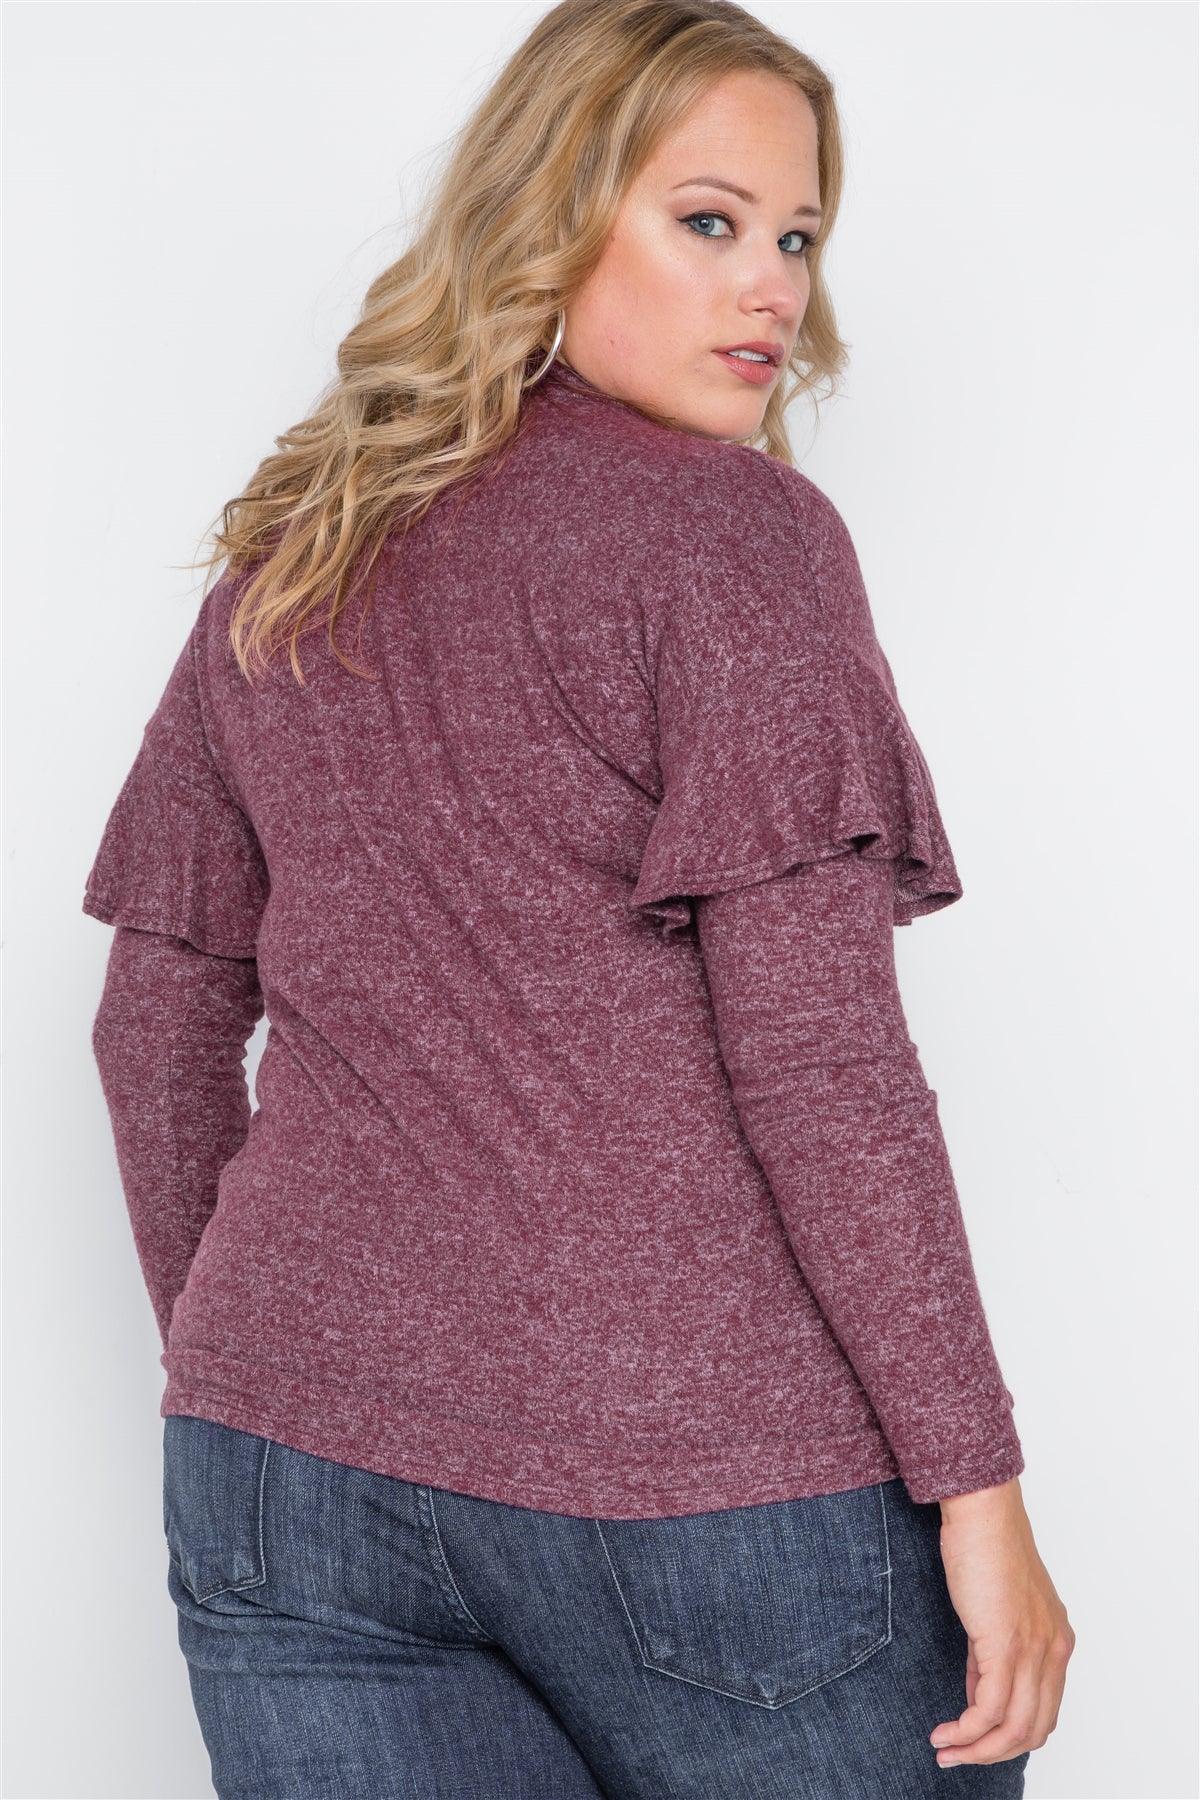 Plus Size Burgundy Ruffle Long Sleeve Casual Sweater /3-2-2